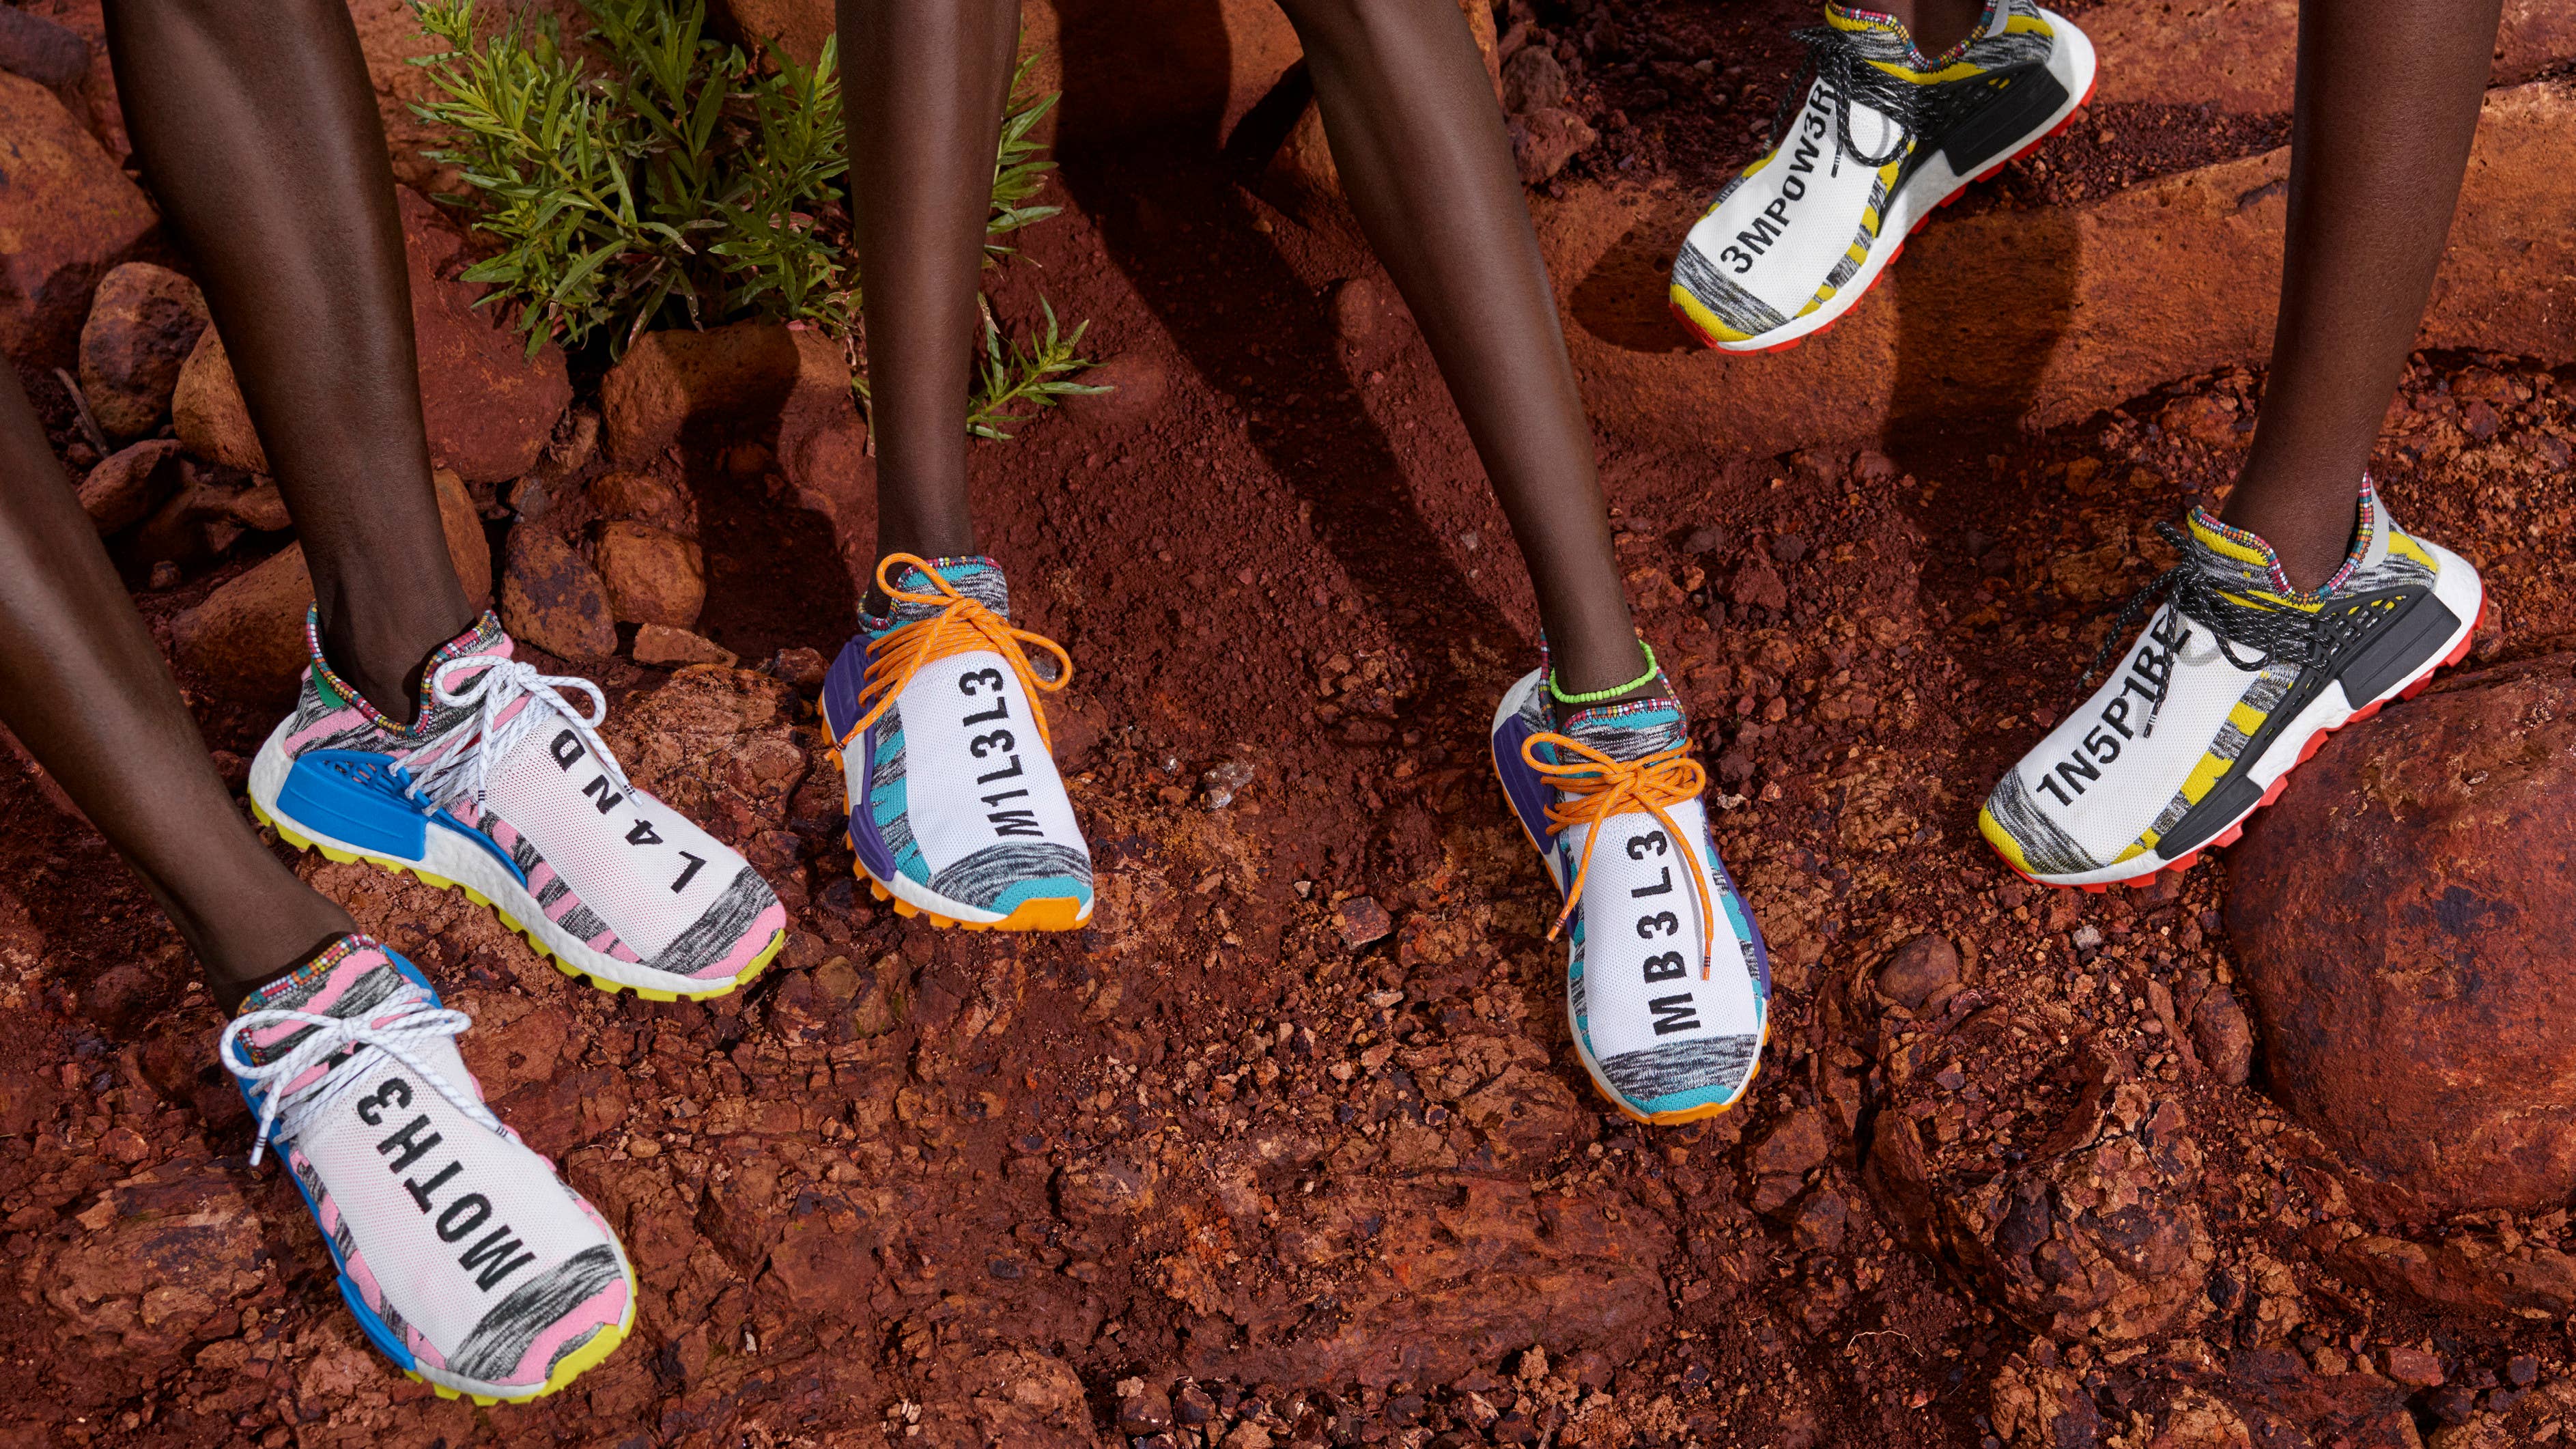 Pharrell Williams x Adidas Tennis Hu sneakers: Everything we know